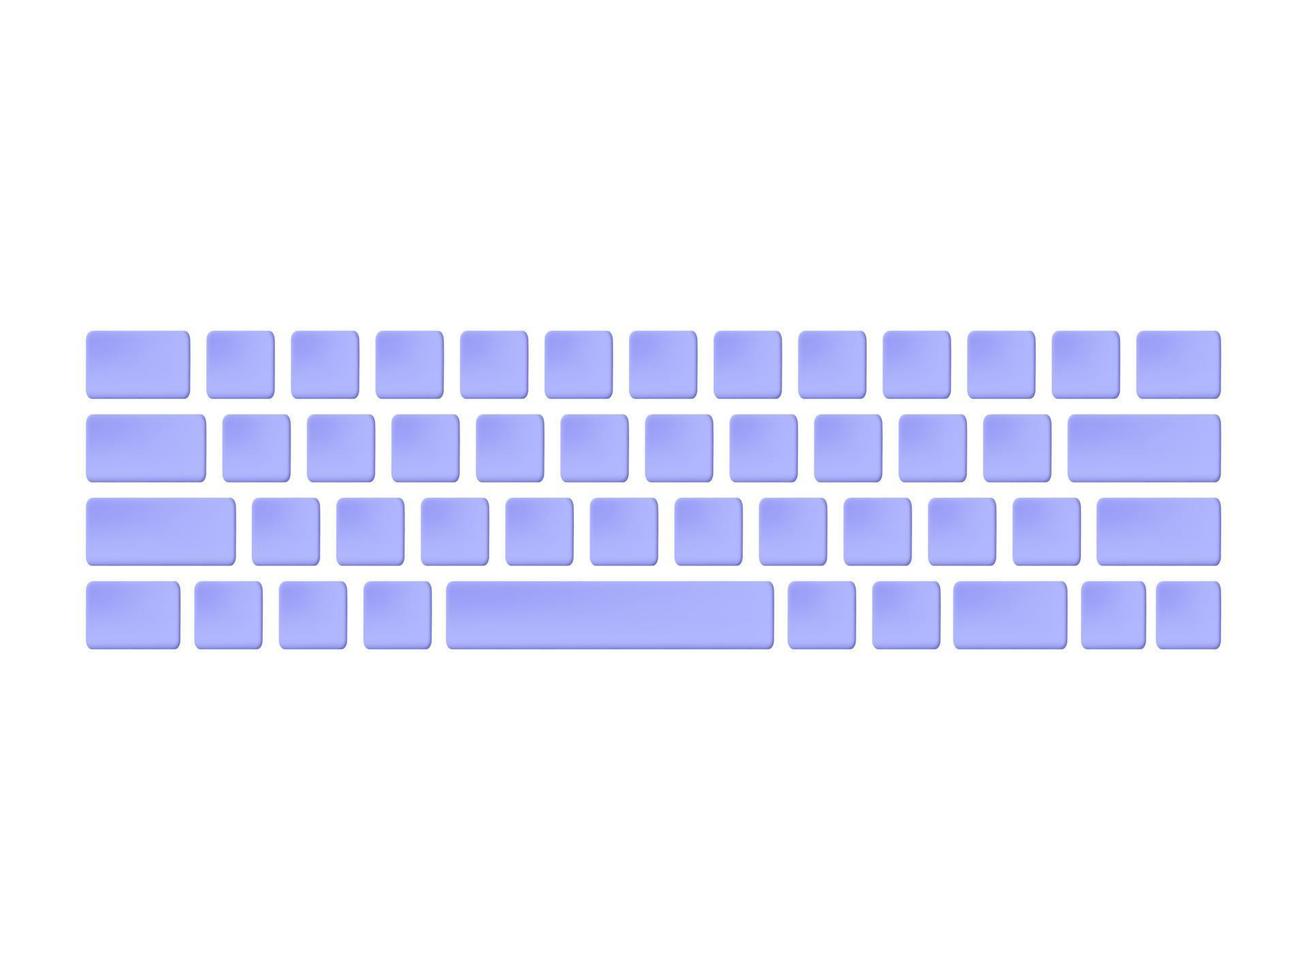 Blue a keyboard. minimal concept. 3d vector illustrations